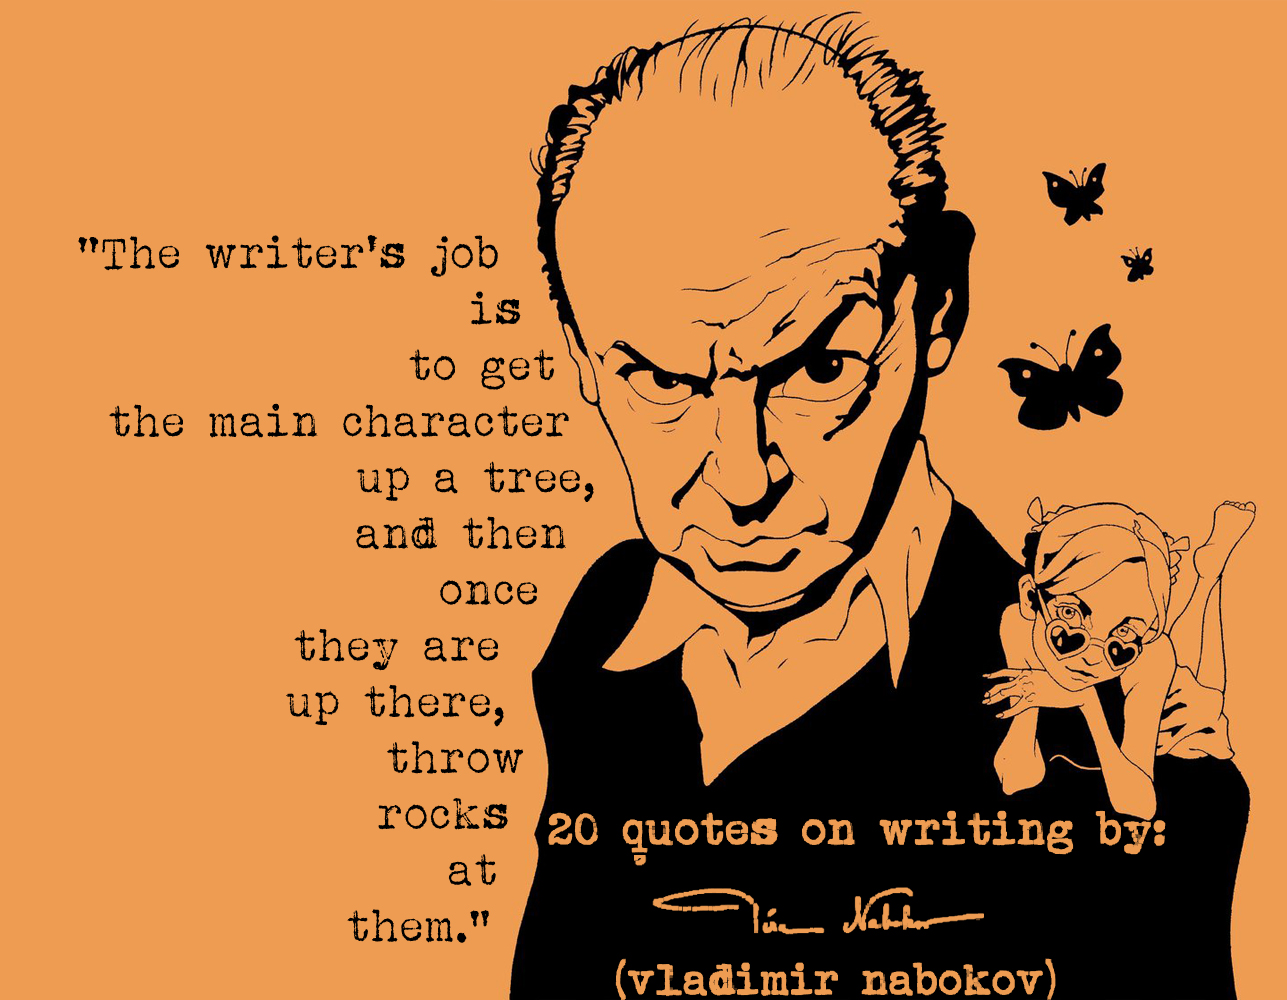 Vladimir Nabokov's quote #2